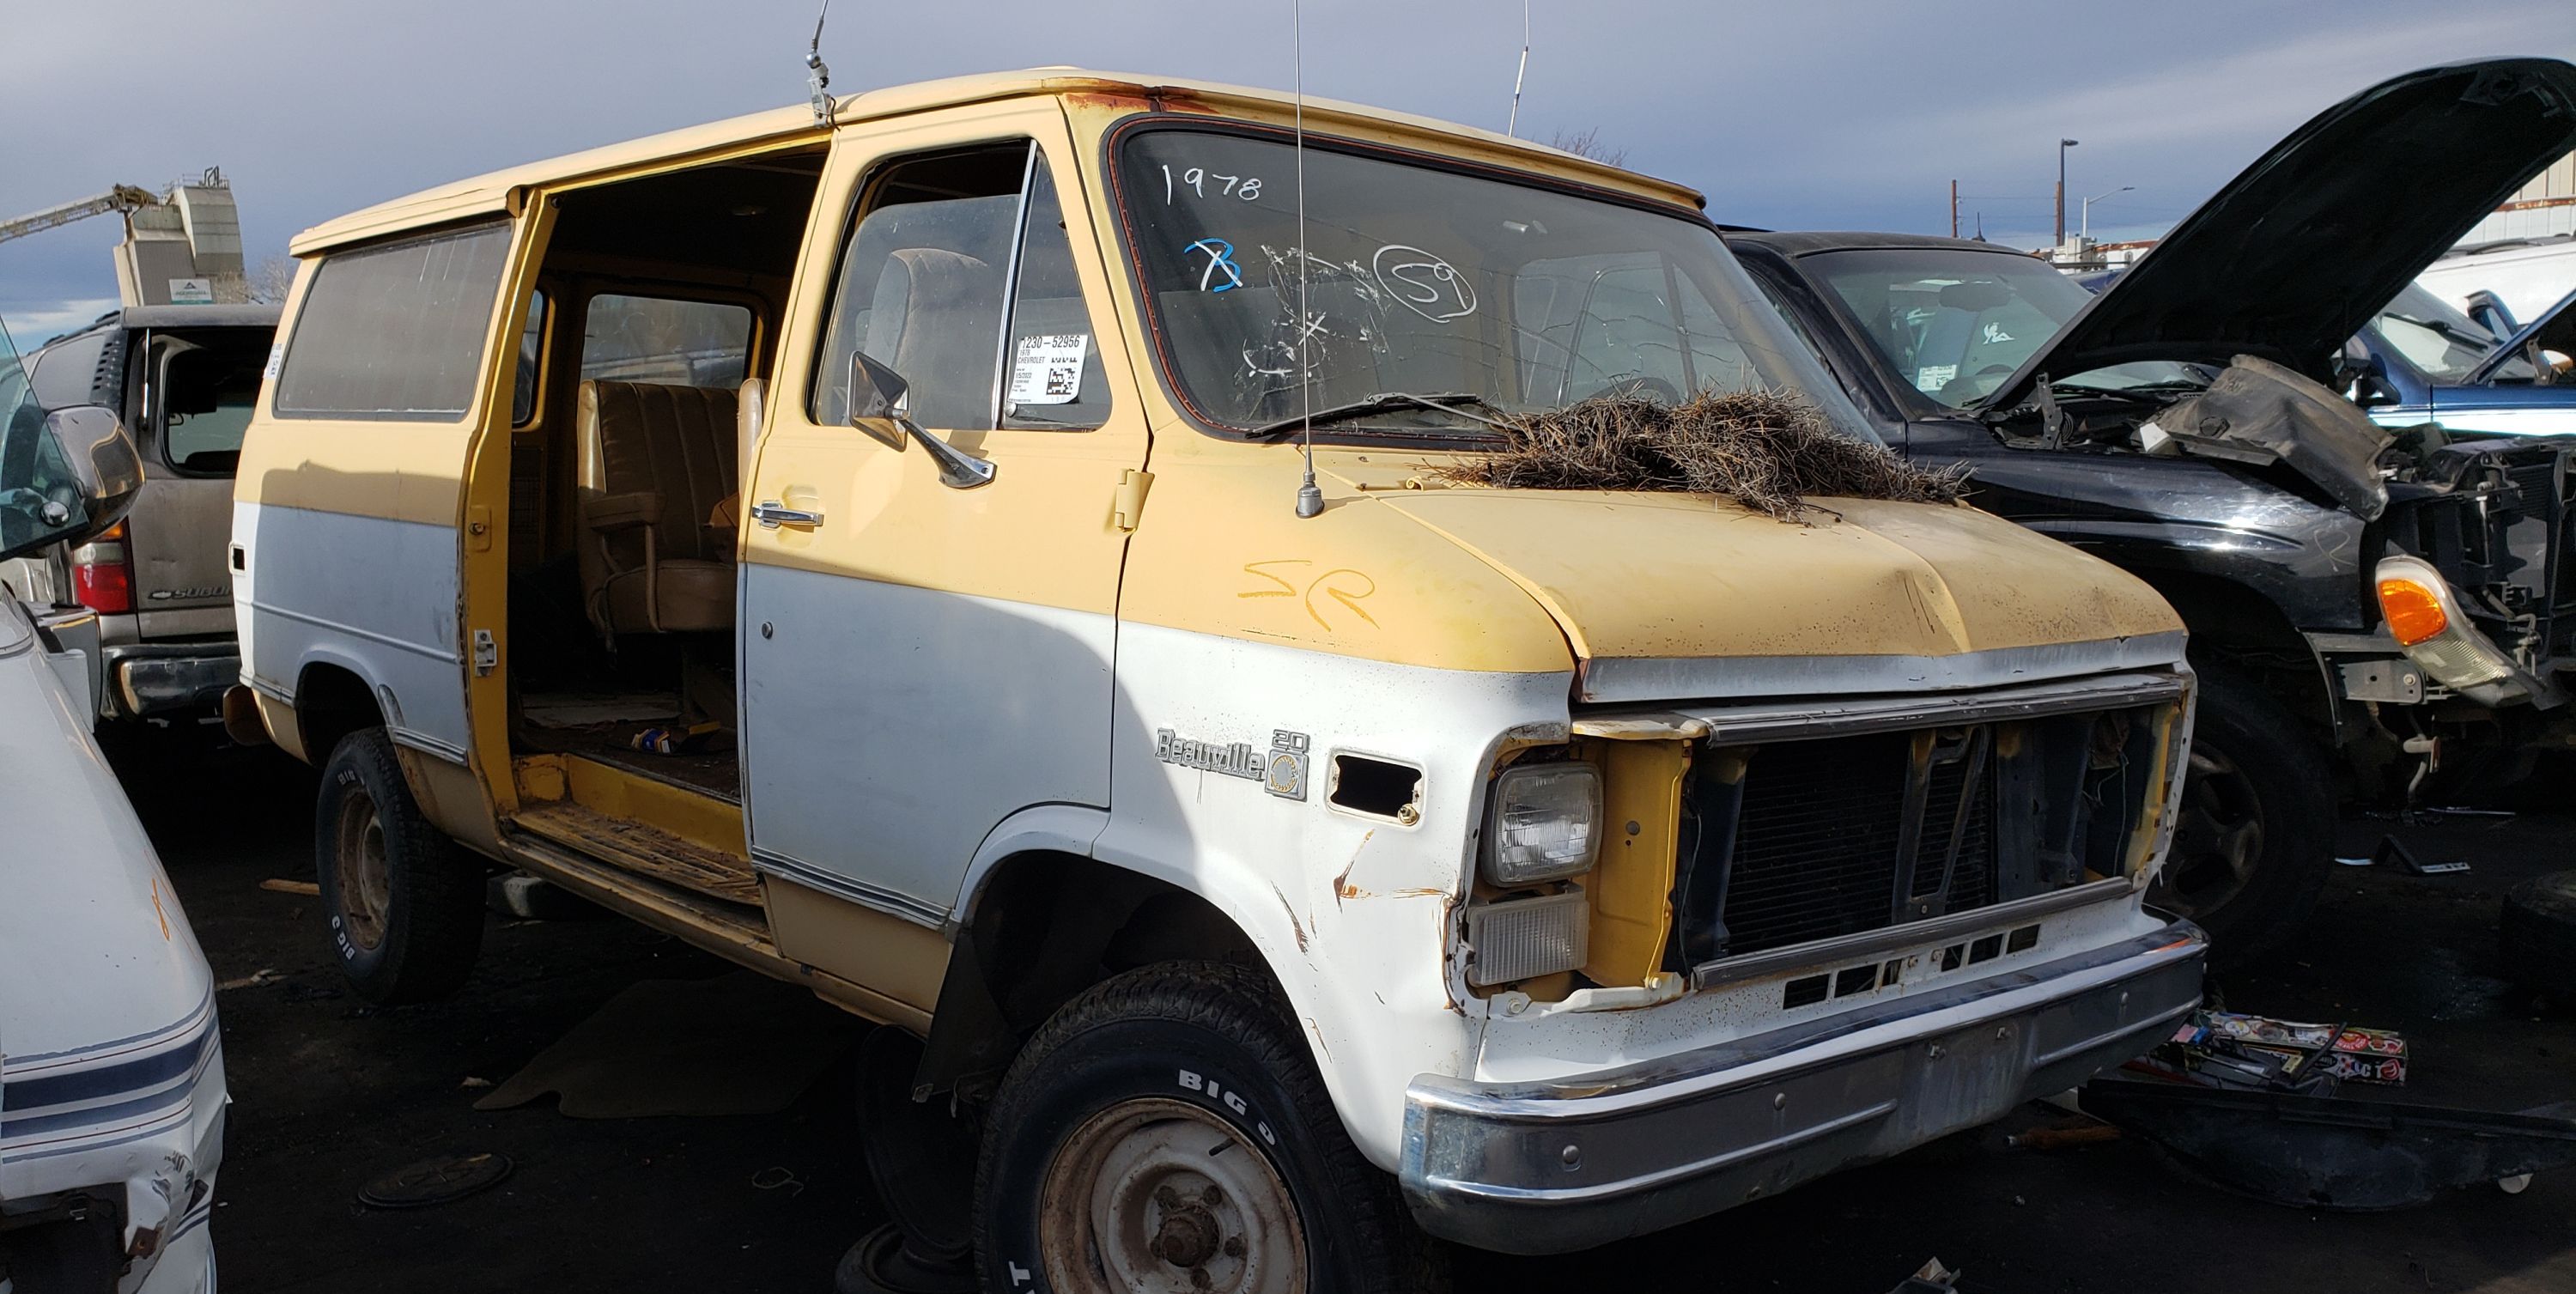 1978 Chevrolet Beauville Van With 3-on-the-Tree Is Junkyard Treasure